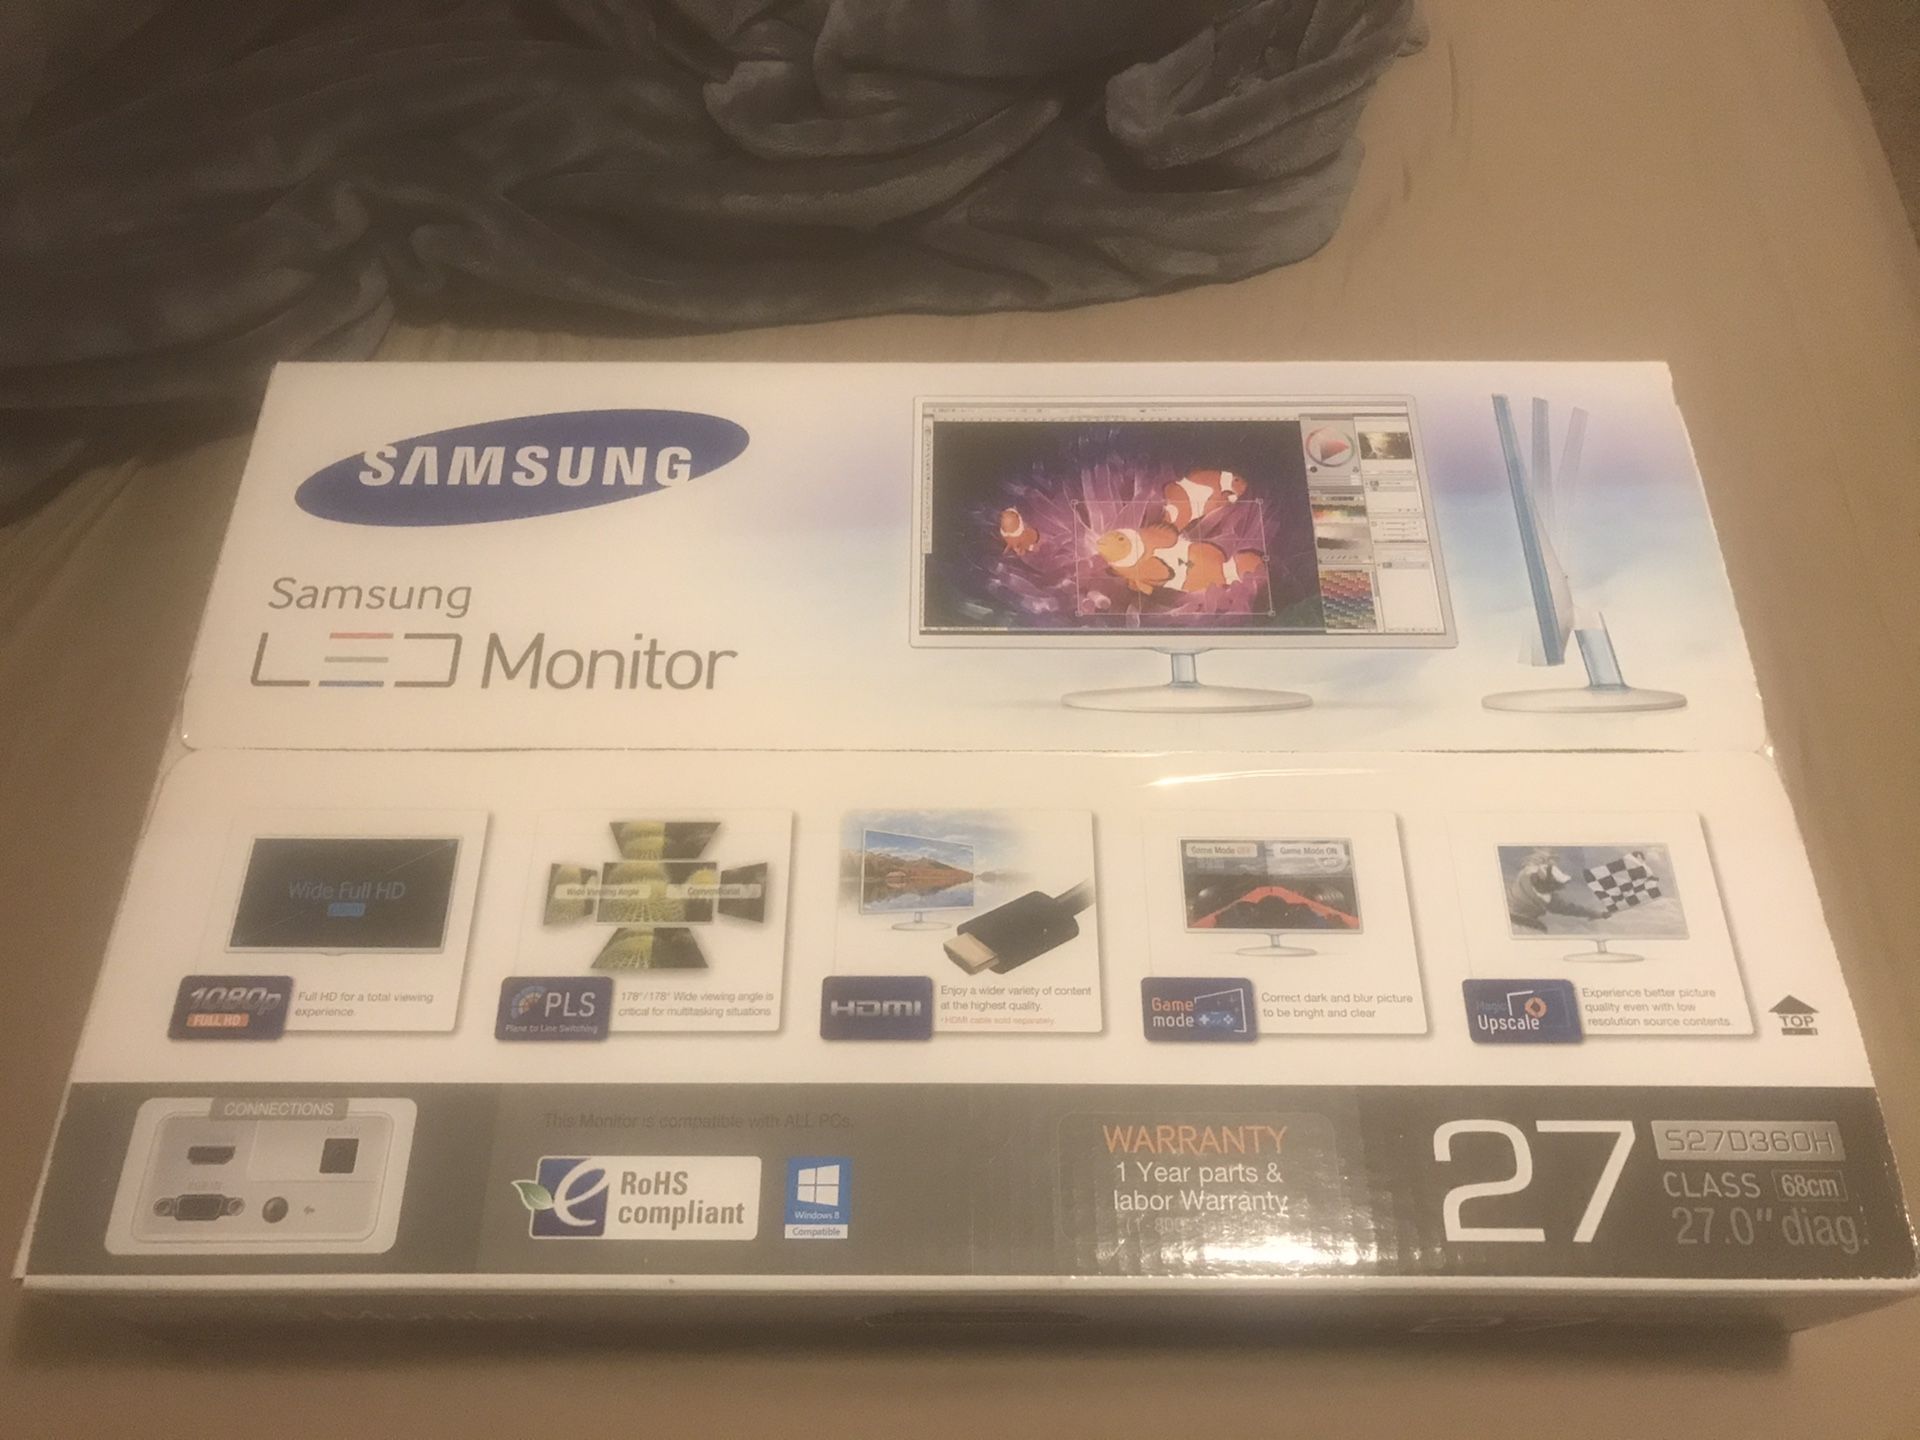 Samsung 27" Monitor 1080p - White